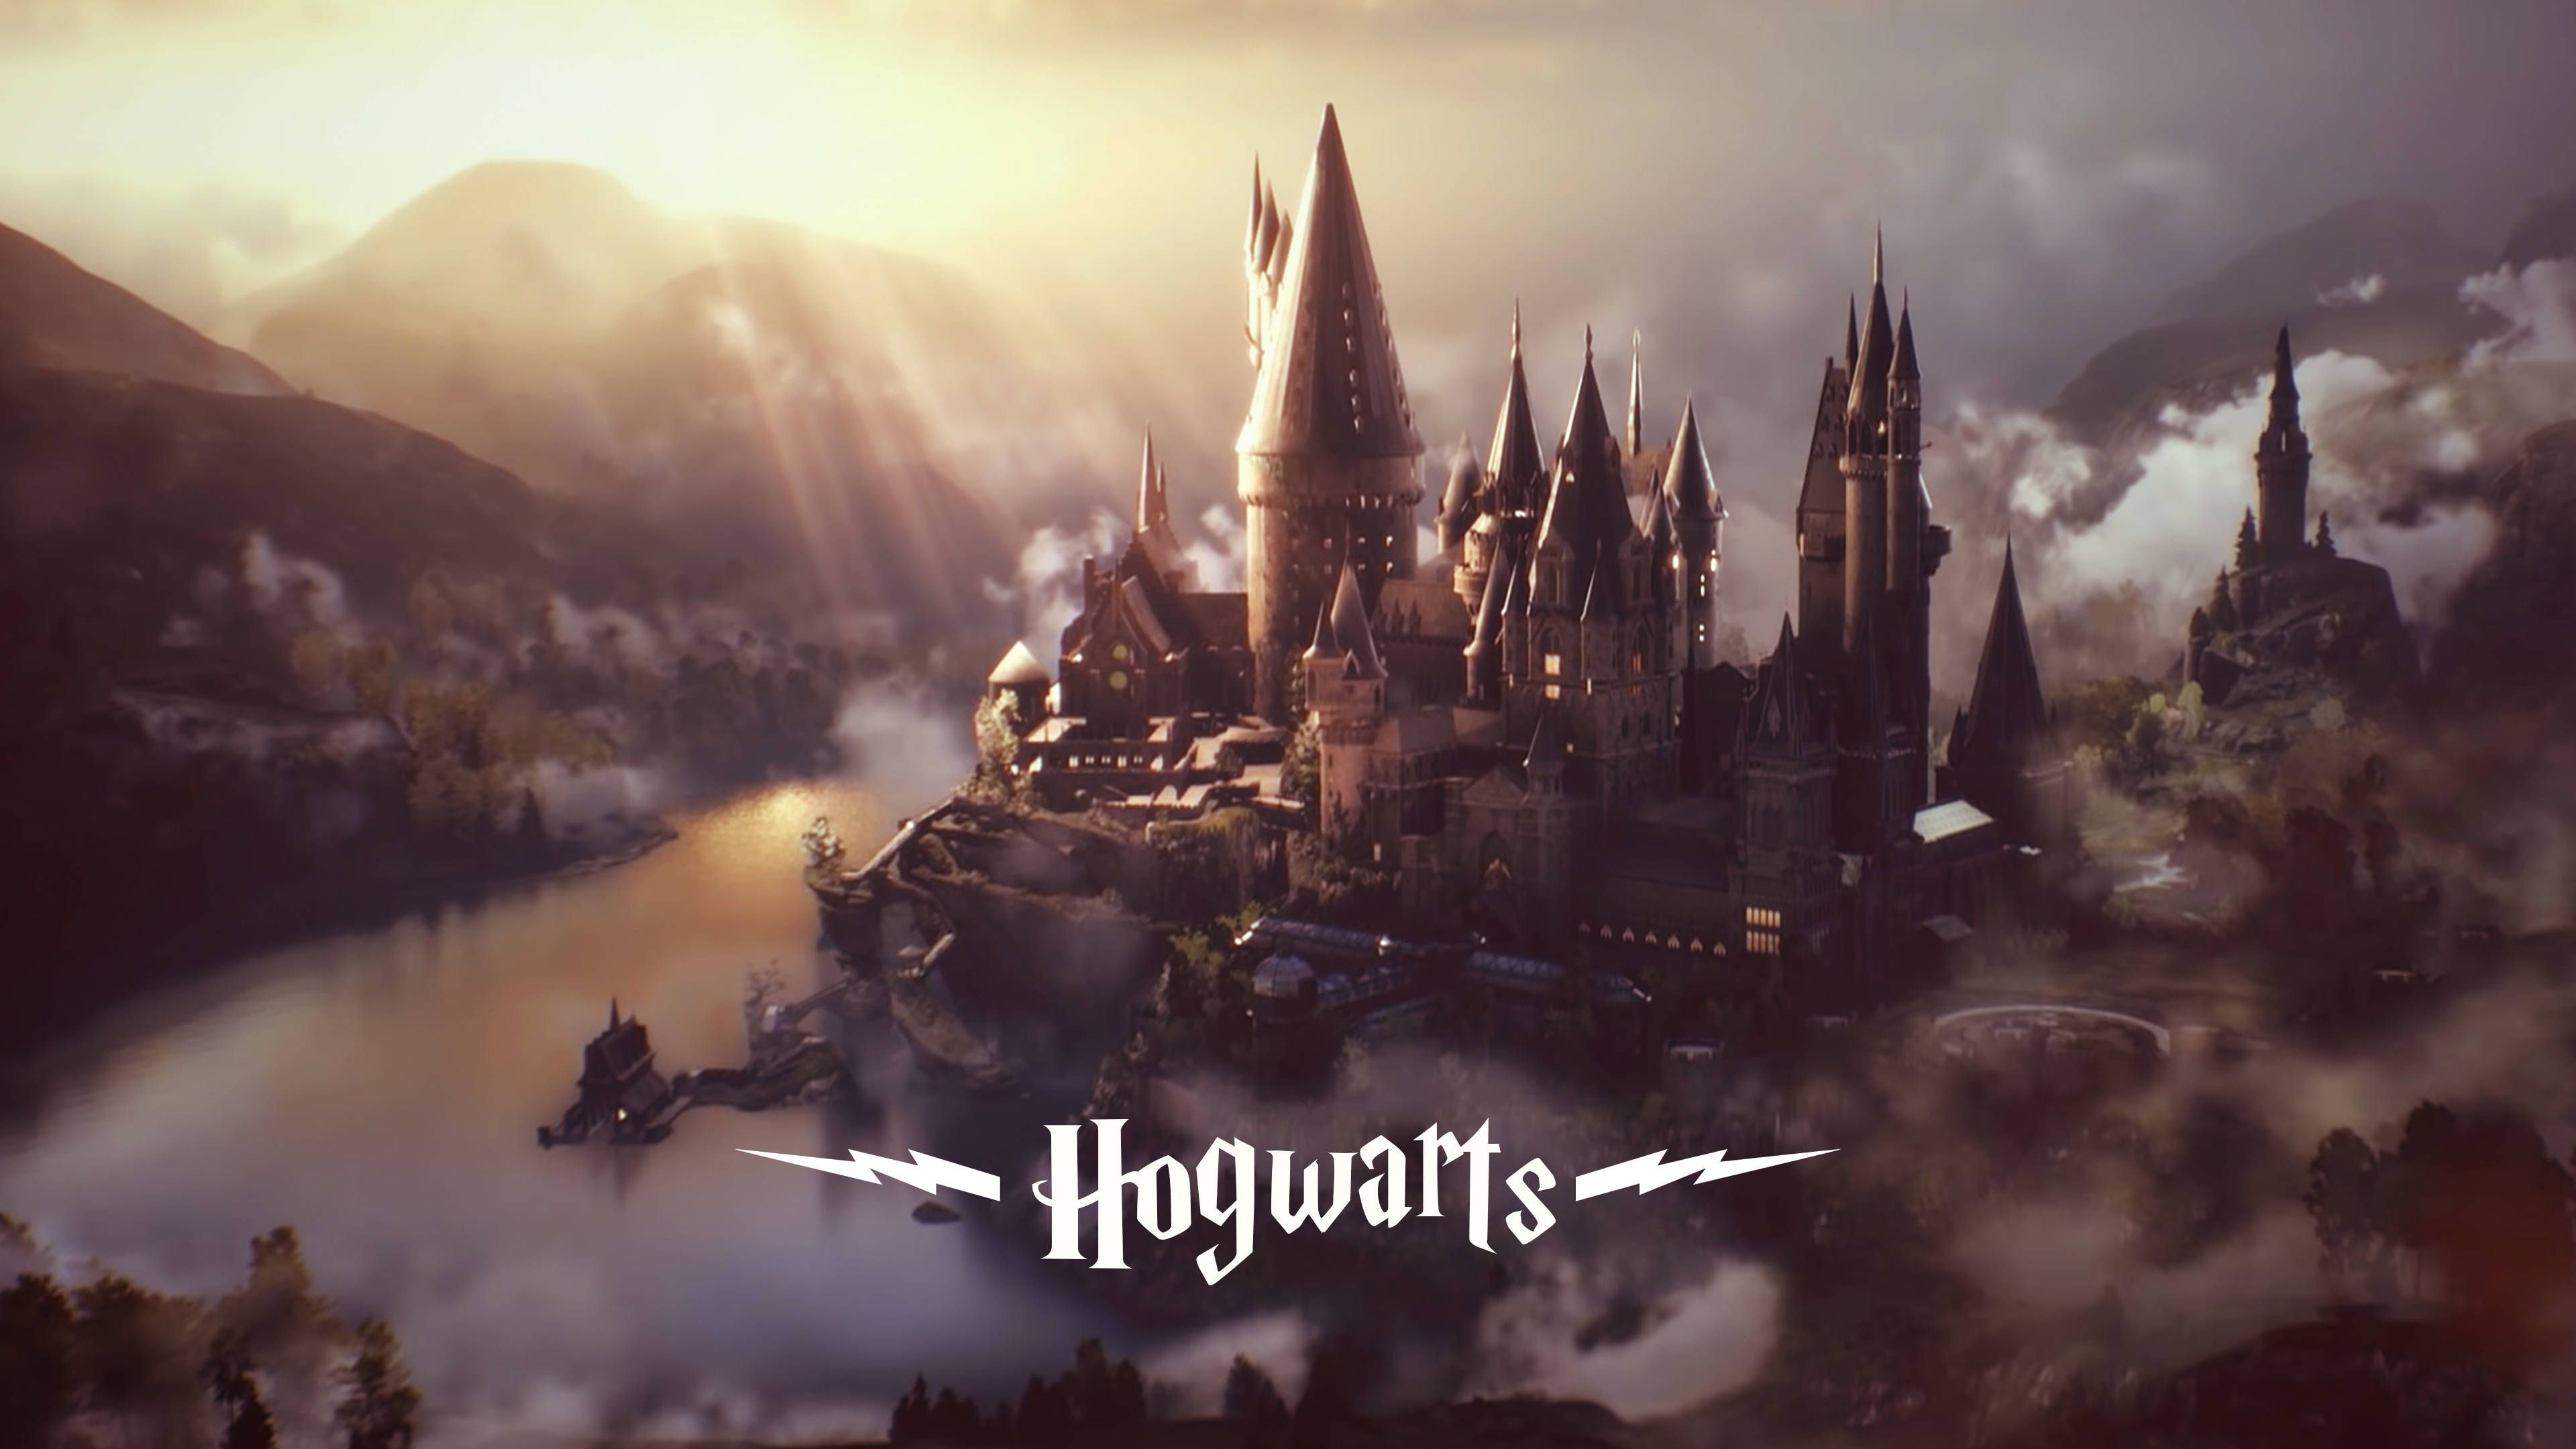 Download Harry Potter Hogwarts Castle Aesthetic Wallpaper